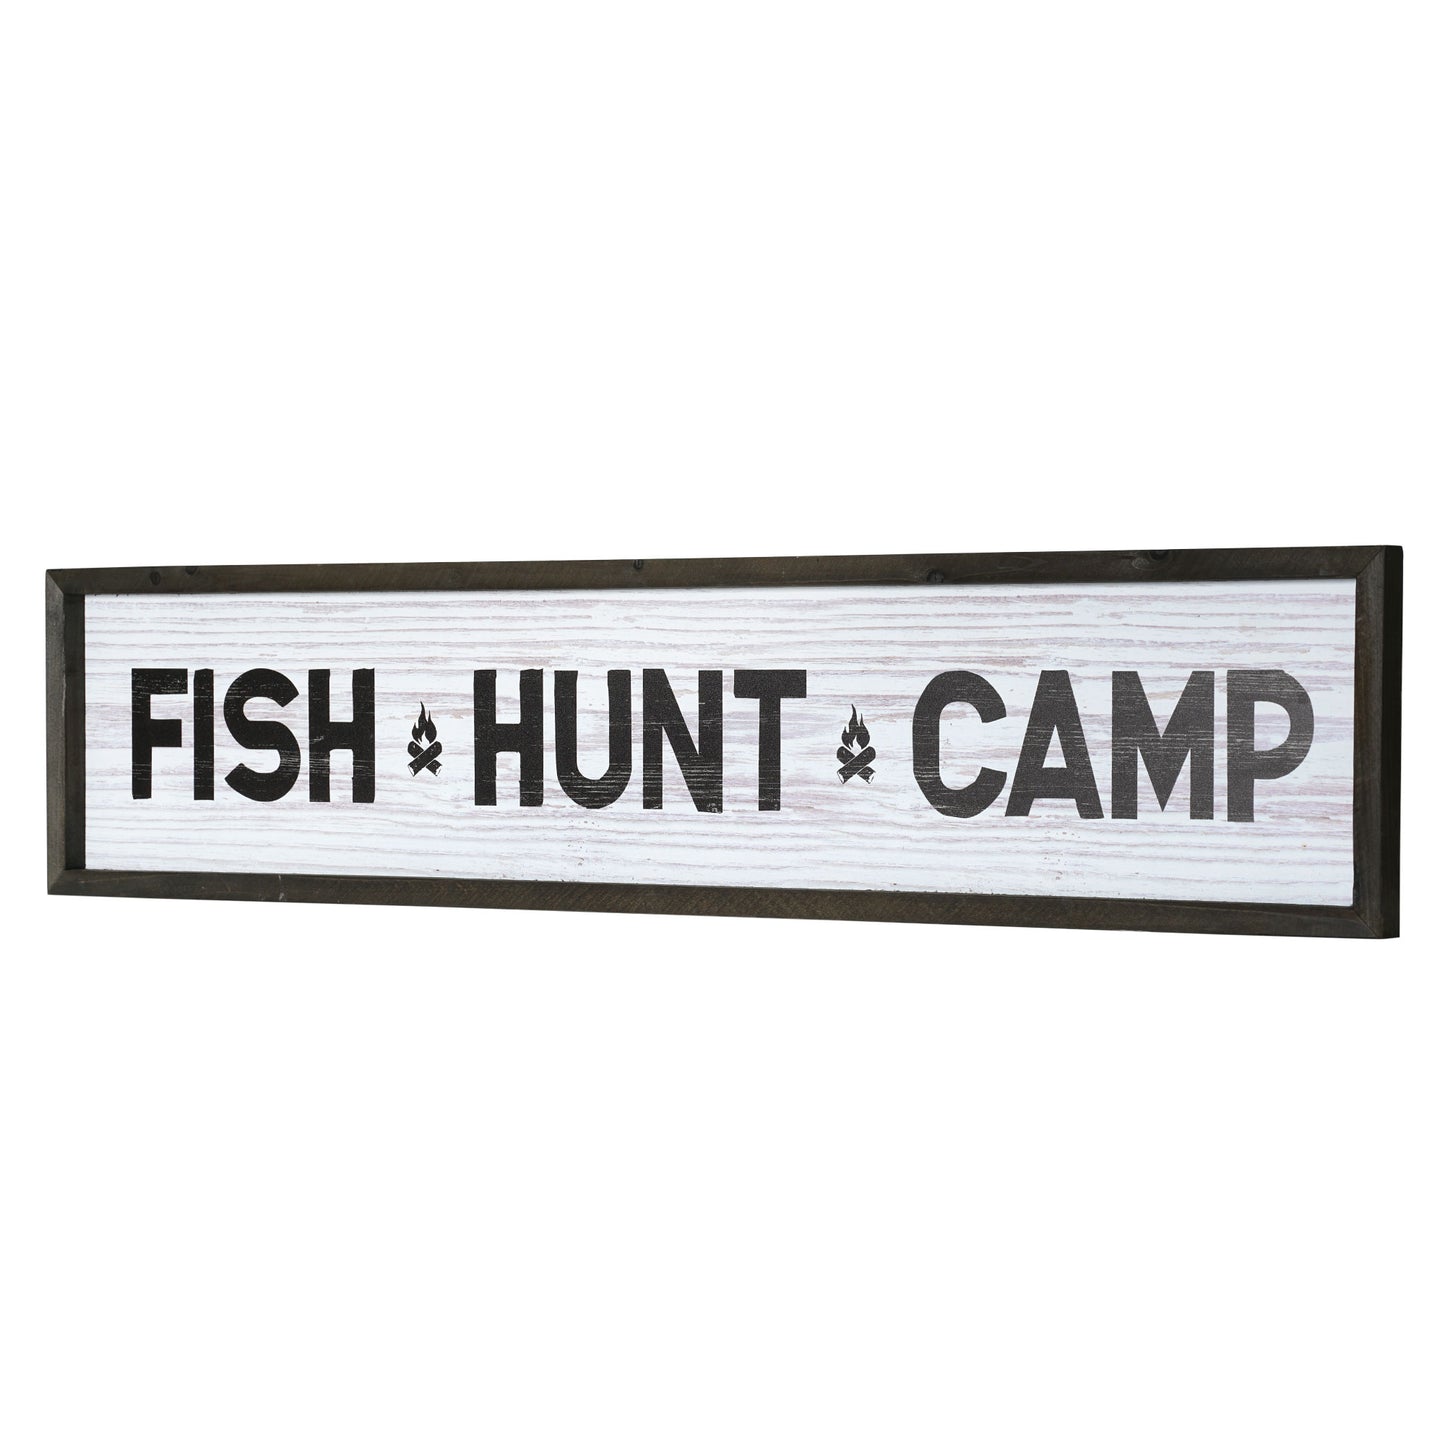 Fish, Hunt, Camp Wood Novelty Wall Sign - 36" x 8"